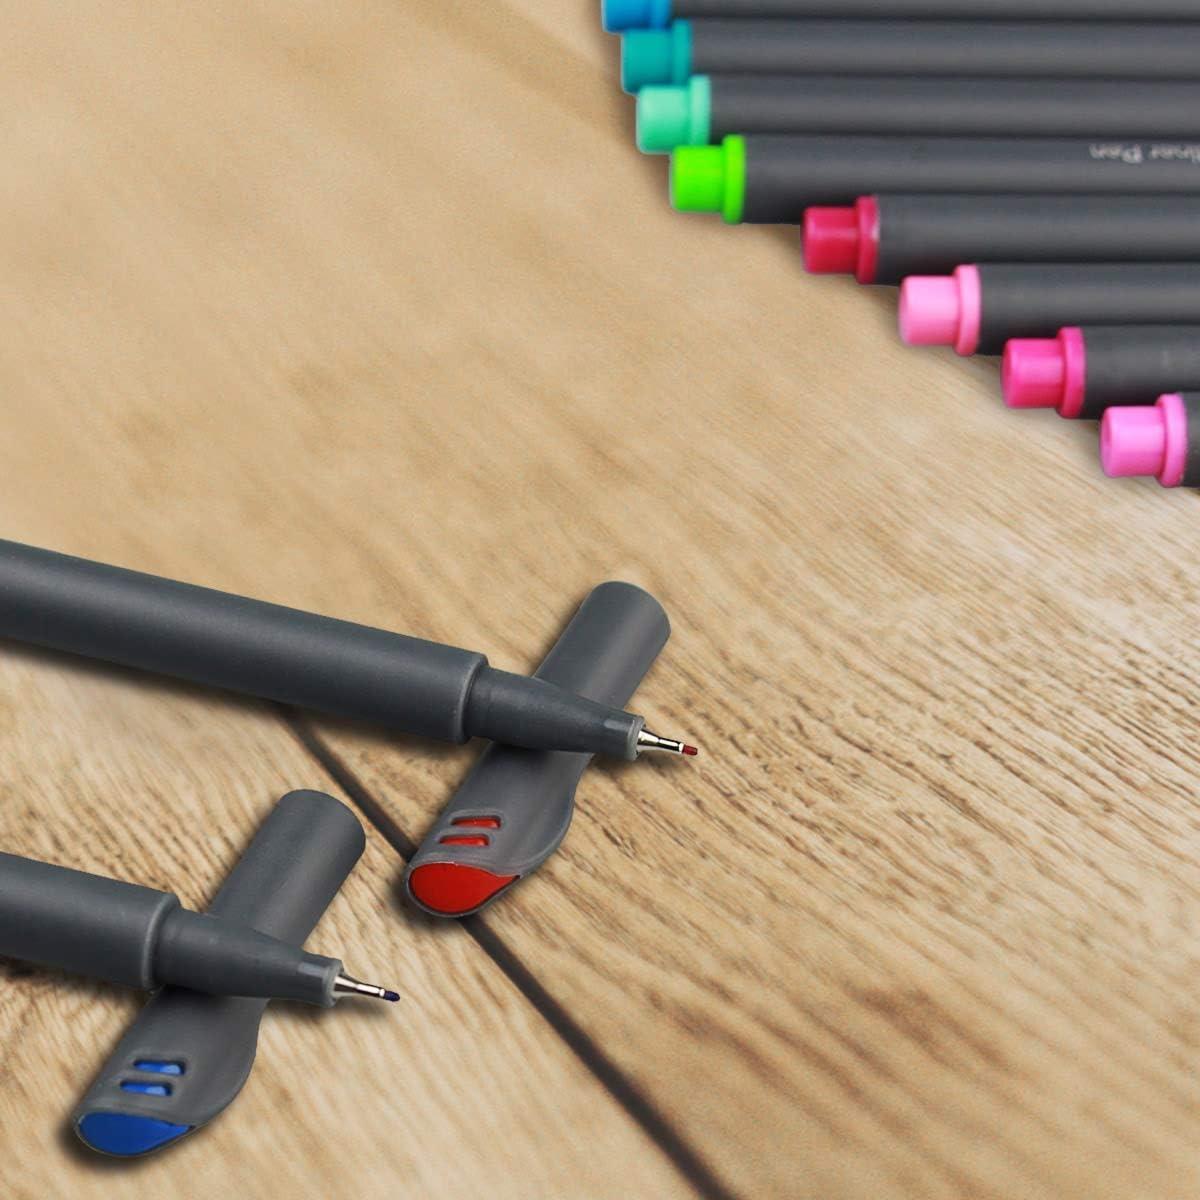 ai-natebok 36 Colored Fineliner Pens Fine Tip Pens Porous